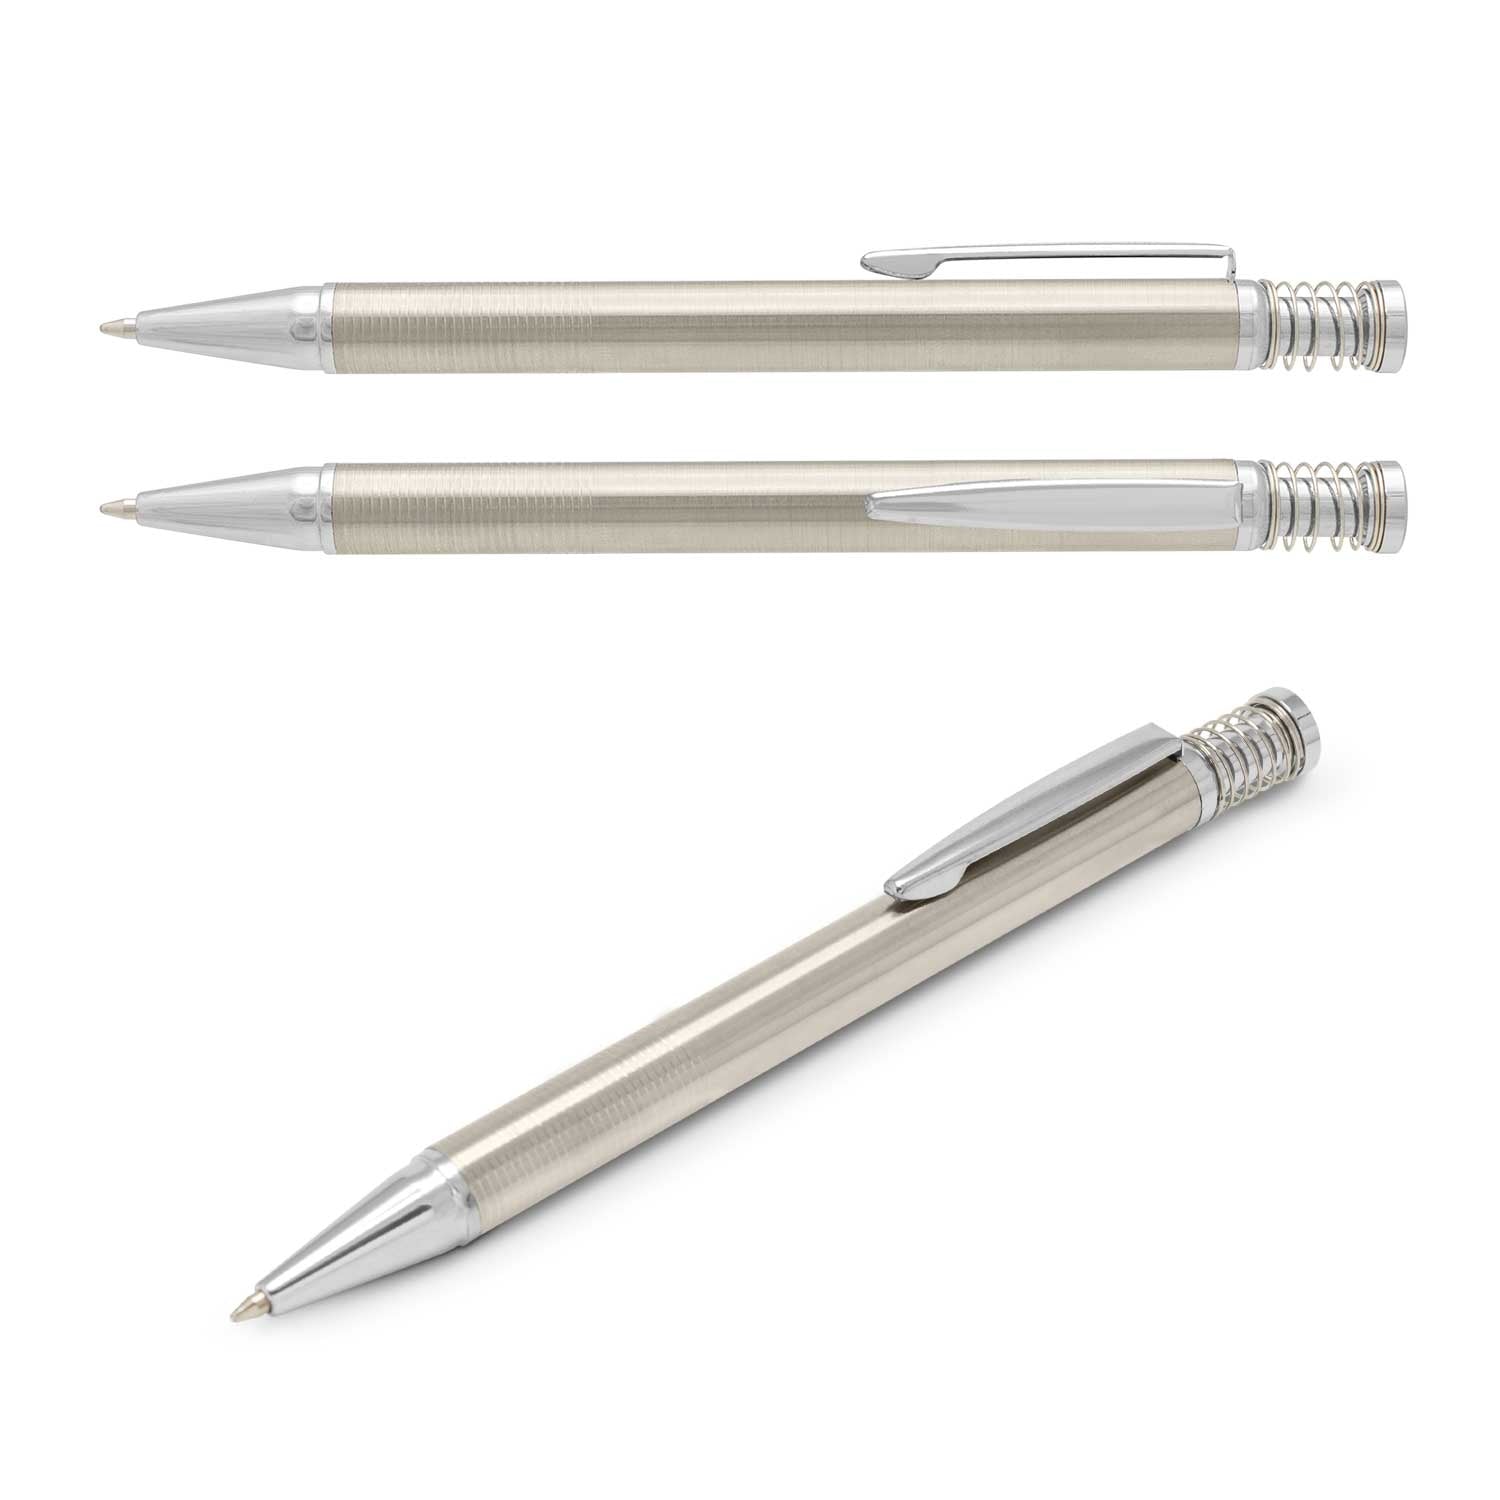 Ruger Steel Pen [113311]